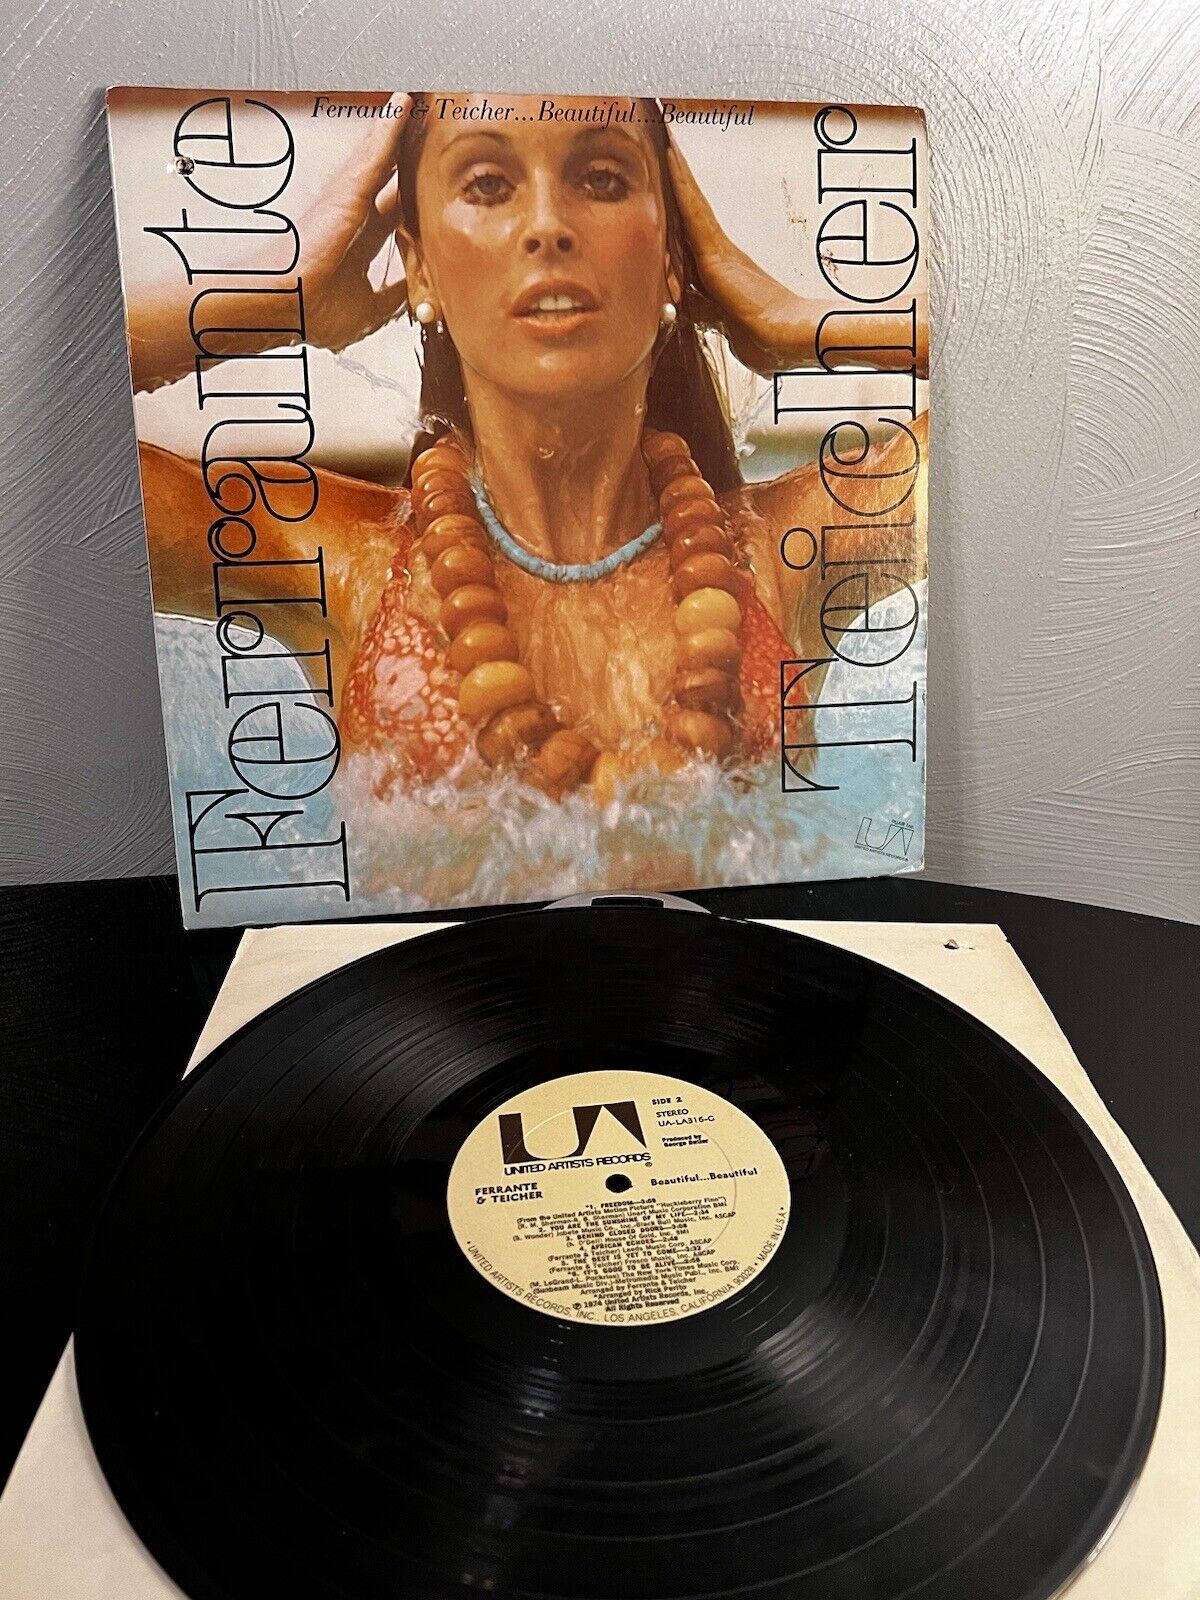 VINTAGE Ferante & Teicher “Beautiful...Beautiful” 1974 1st Press Vinyl LP -